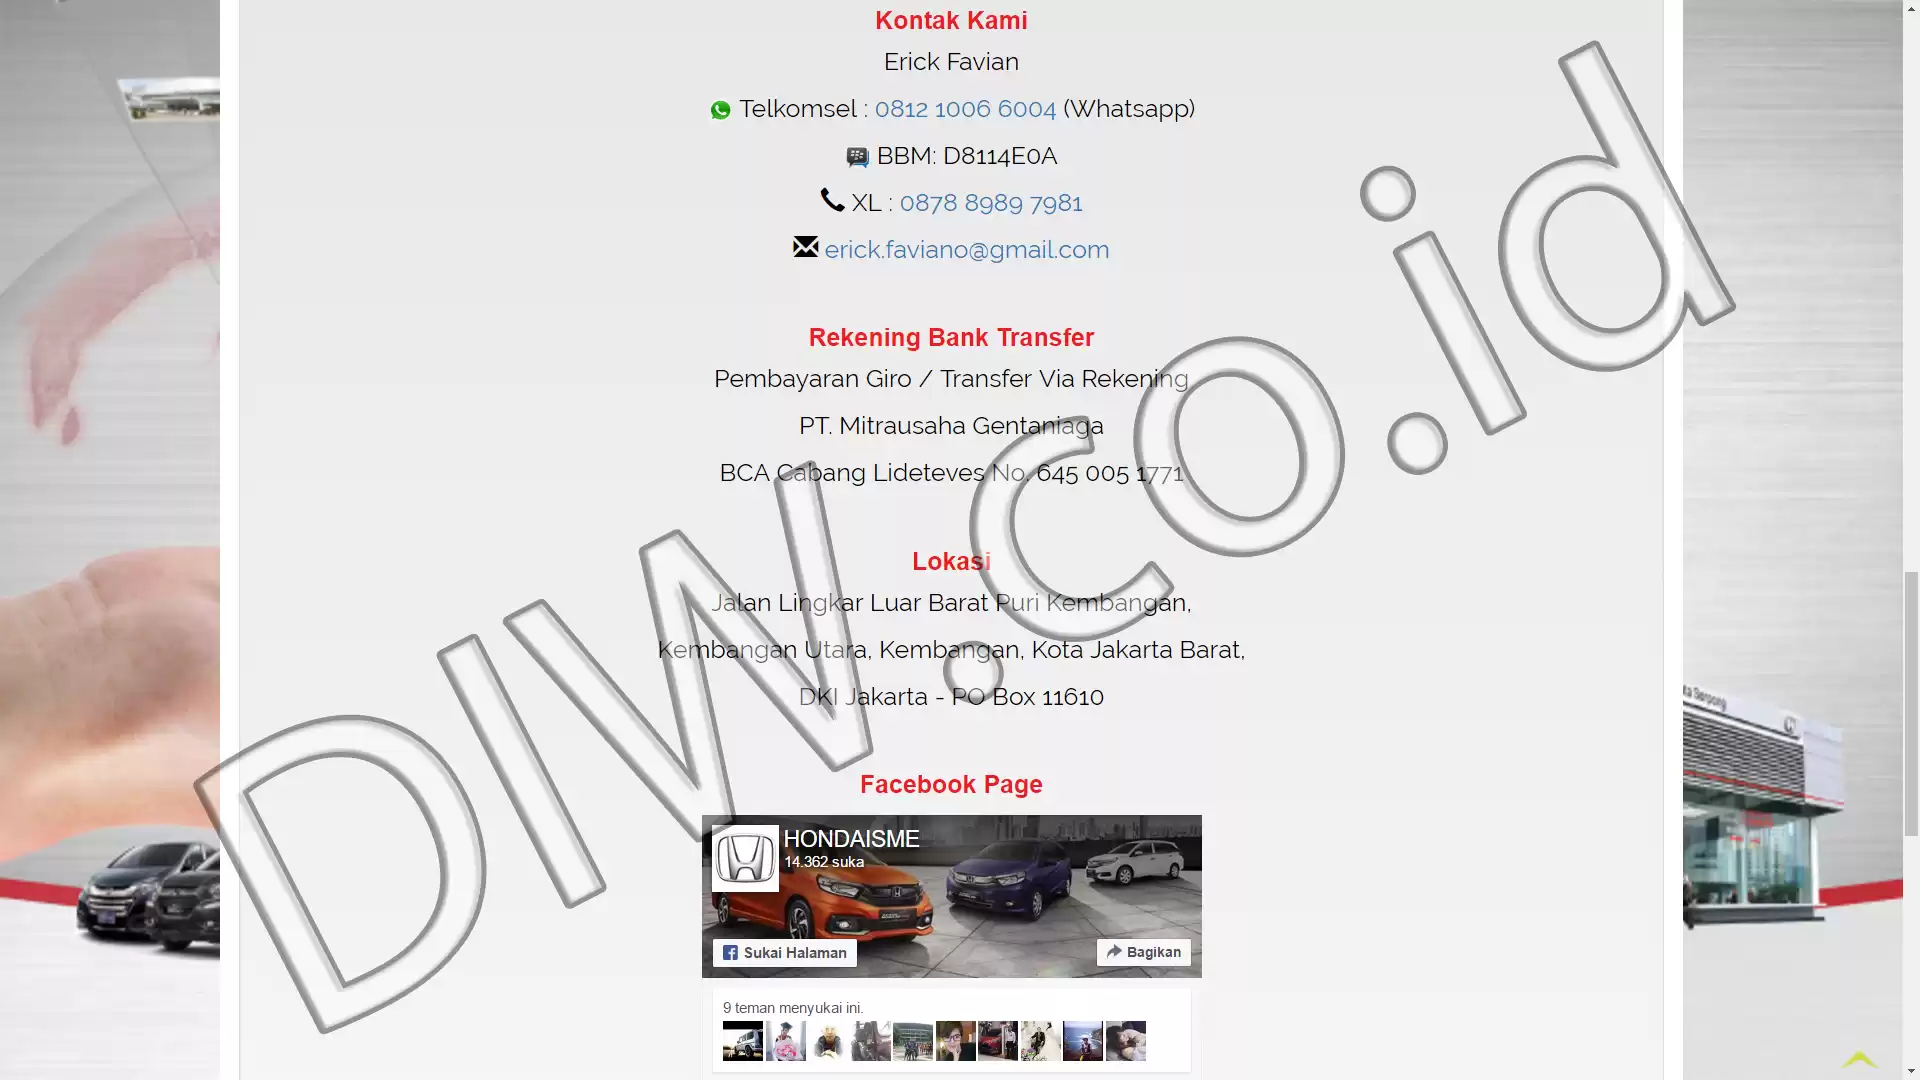 Portfolio - Dealer Honda Jakarta - DIW.co.id (Digital In Website) Jasa Pembuatan Website dan Program Skripsi